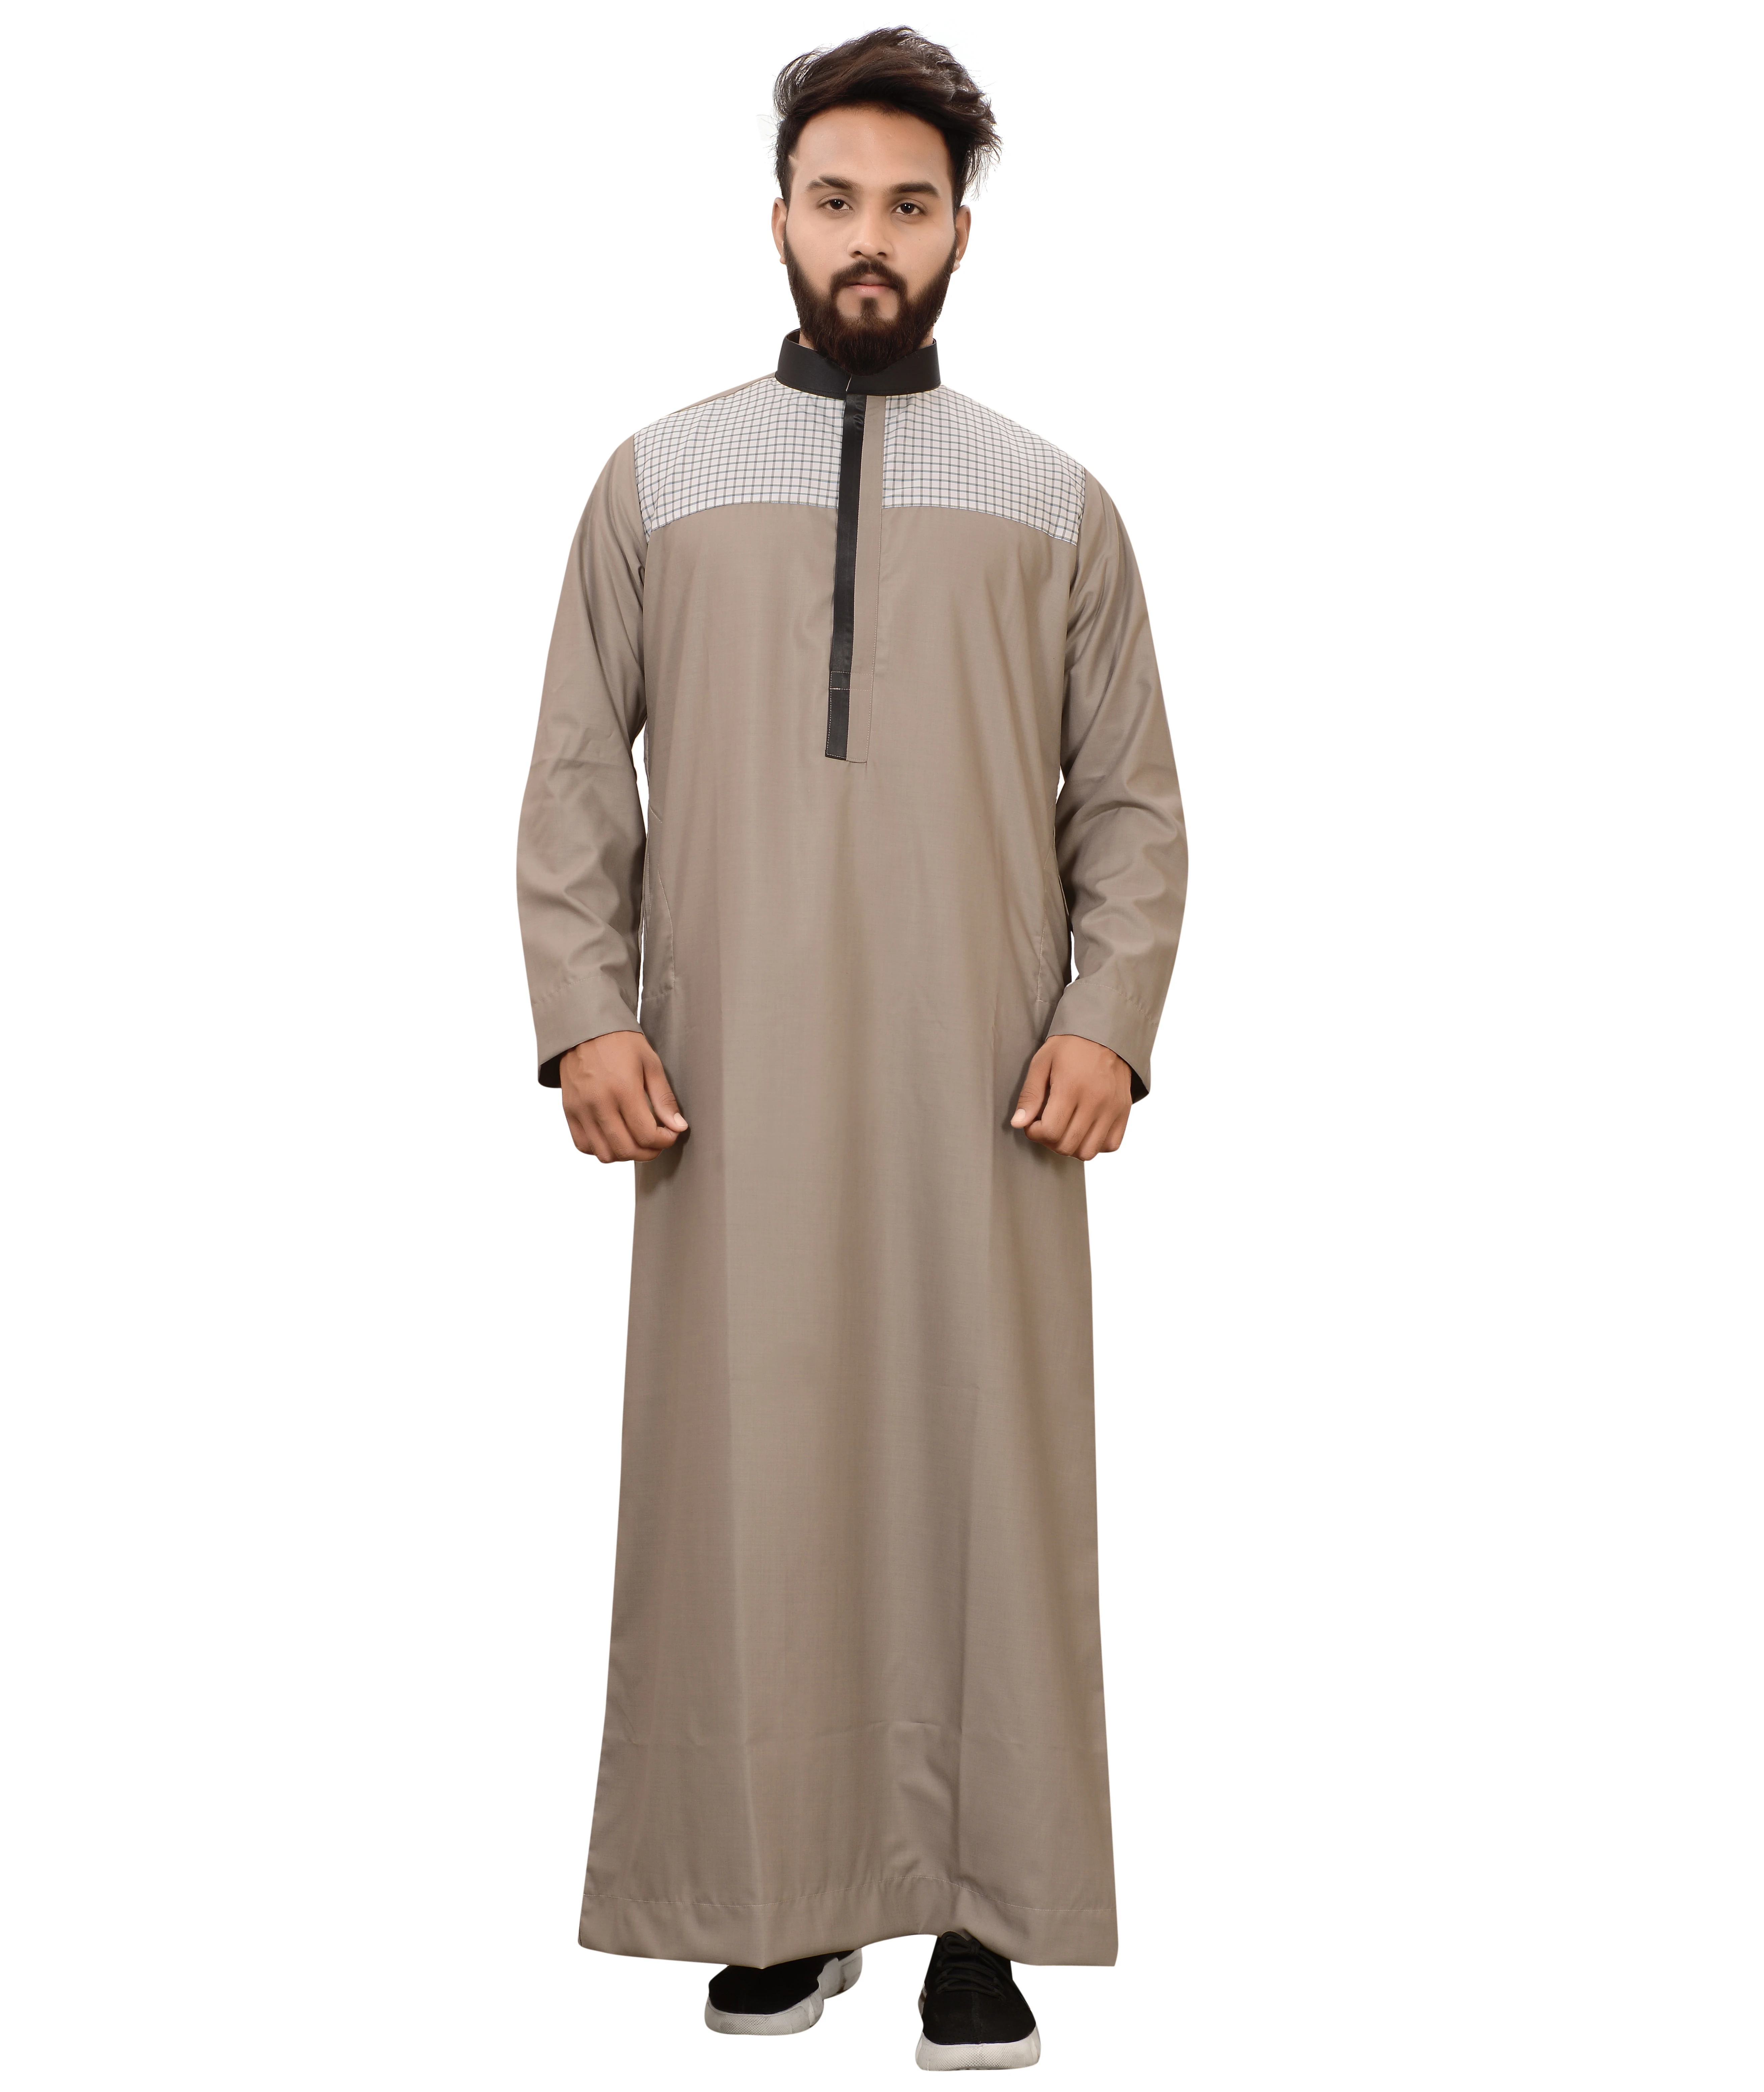 Arab Robe Men Kurta Abaya Islamic Jubba Thobe Saudi Muslim Kfatan Dishdashs Suit 